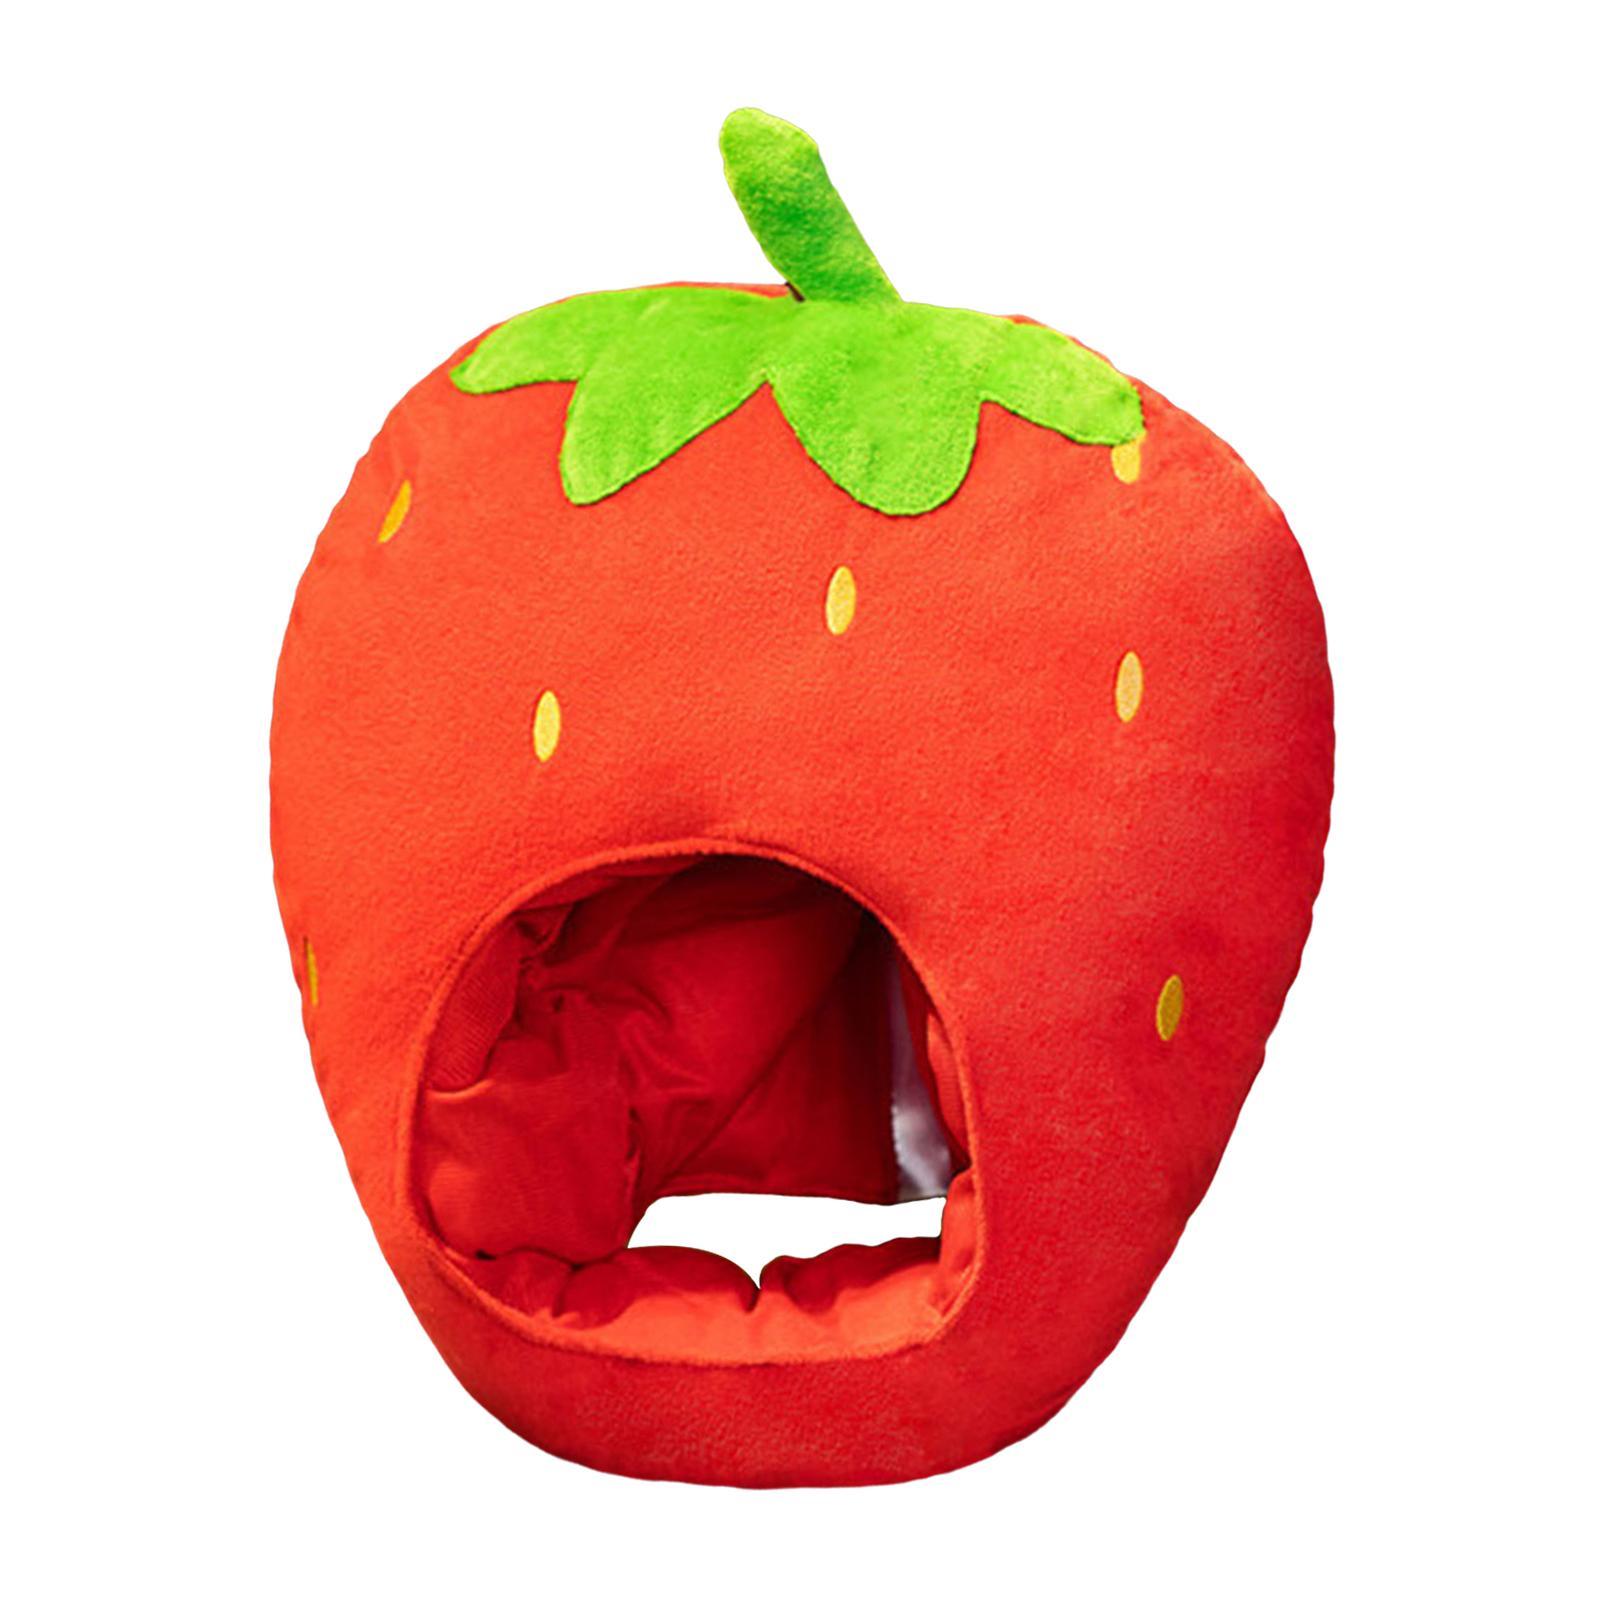 Funny Strawberry Hat Cartoon Novelty Headdress for Cosplay Role Play Holiday